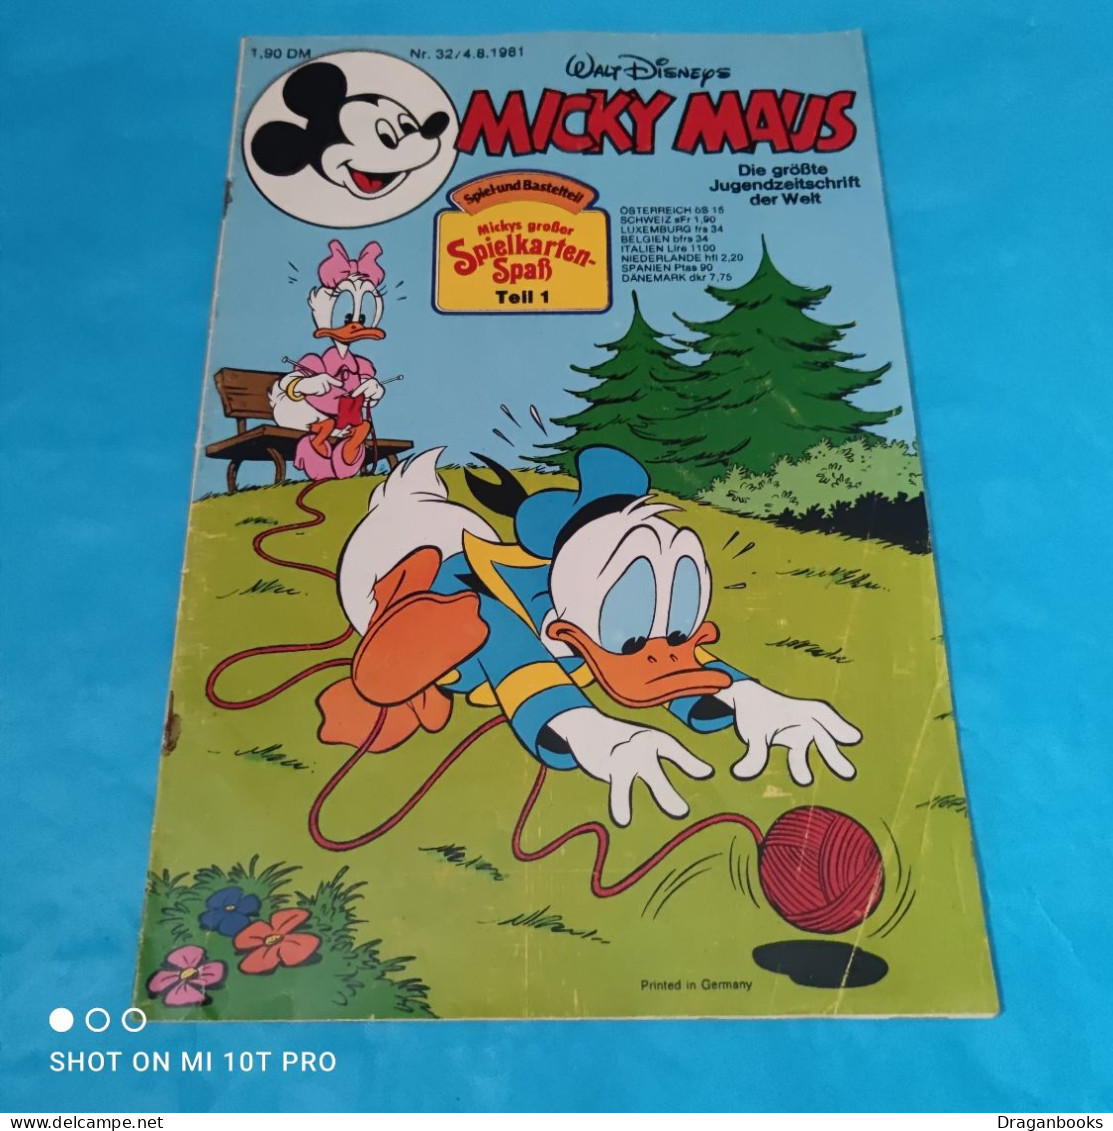 Micky Maus Nr. 32 - 4.8.1981 - Walt Disney